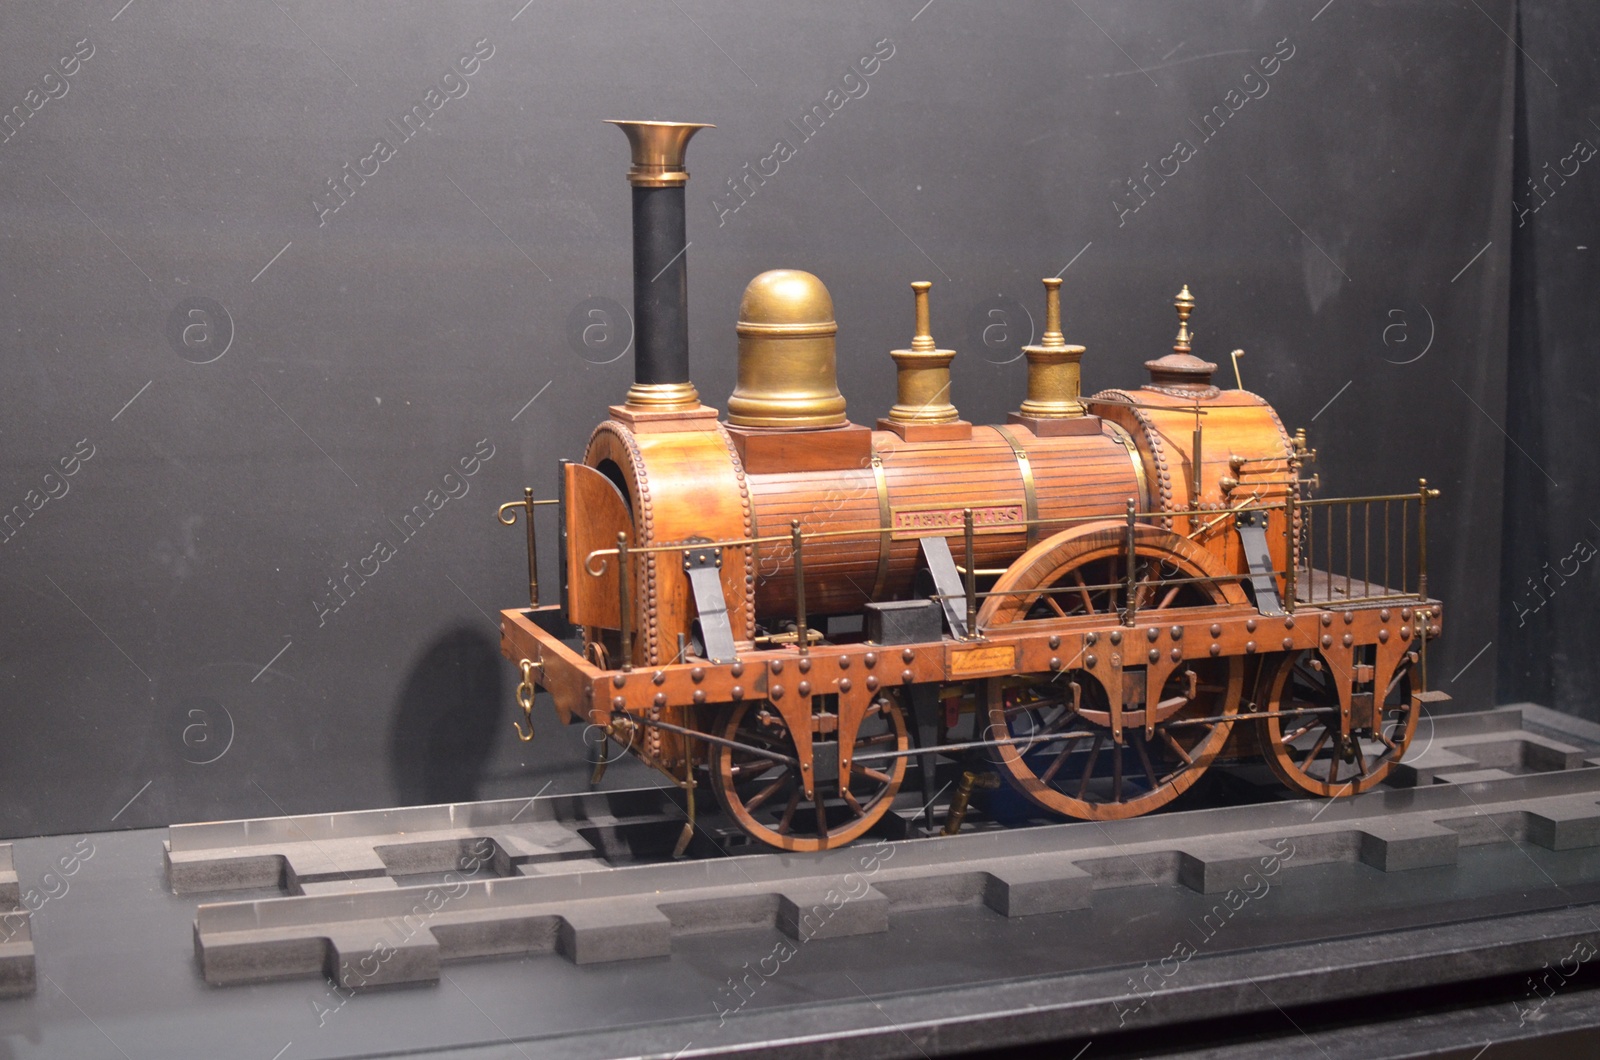 Photo of Utrecht, Netherlands - July 23, 2022: Model of old train on display in Spoorwegmuseum